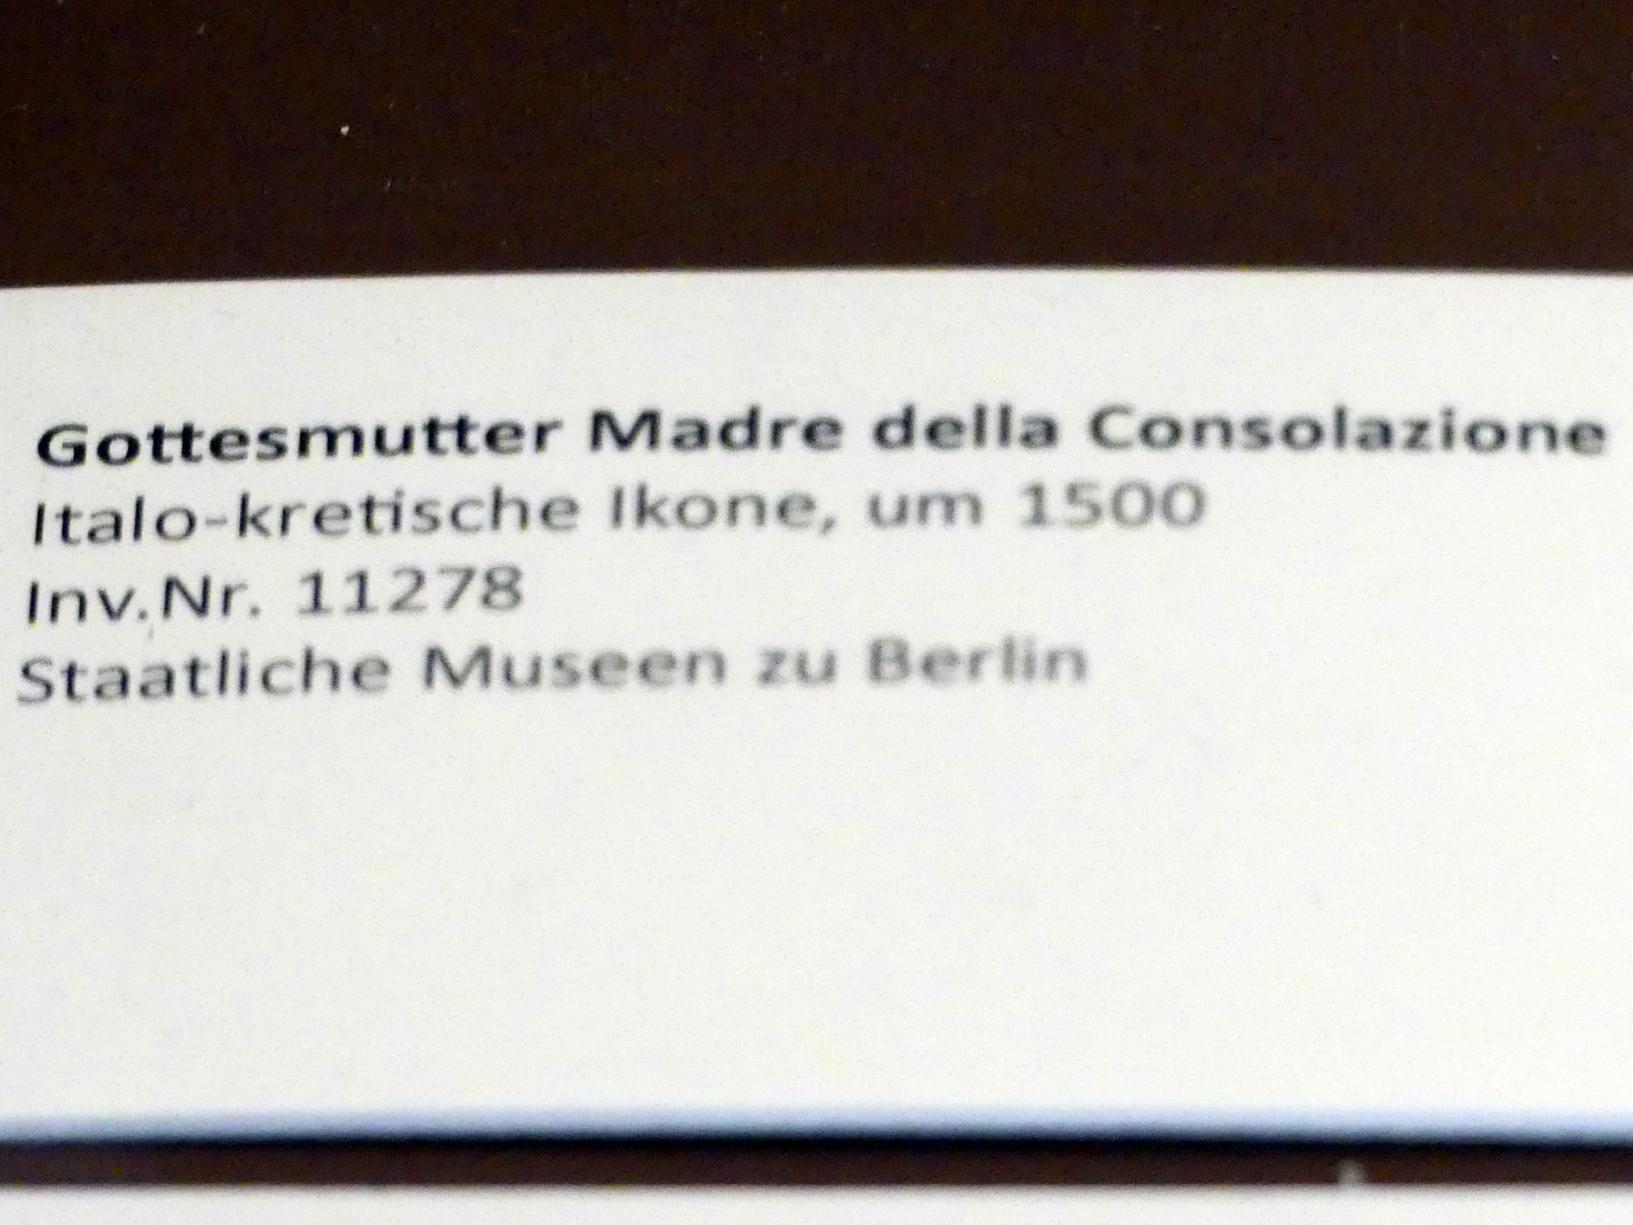 Gottesmutter Madre della Consolazione, Frankfurt am Main, Ikonen-Museum, Erdgeschoss, um 1500, Bild 2/2